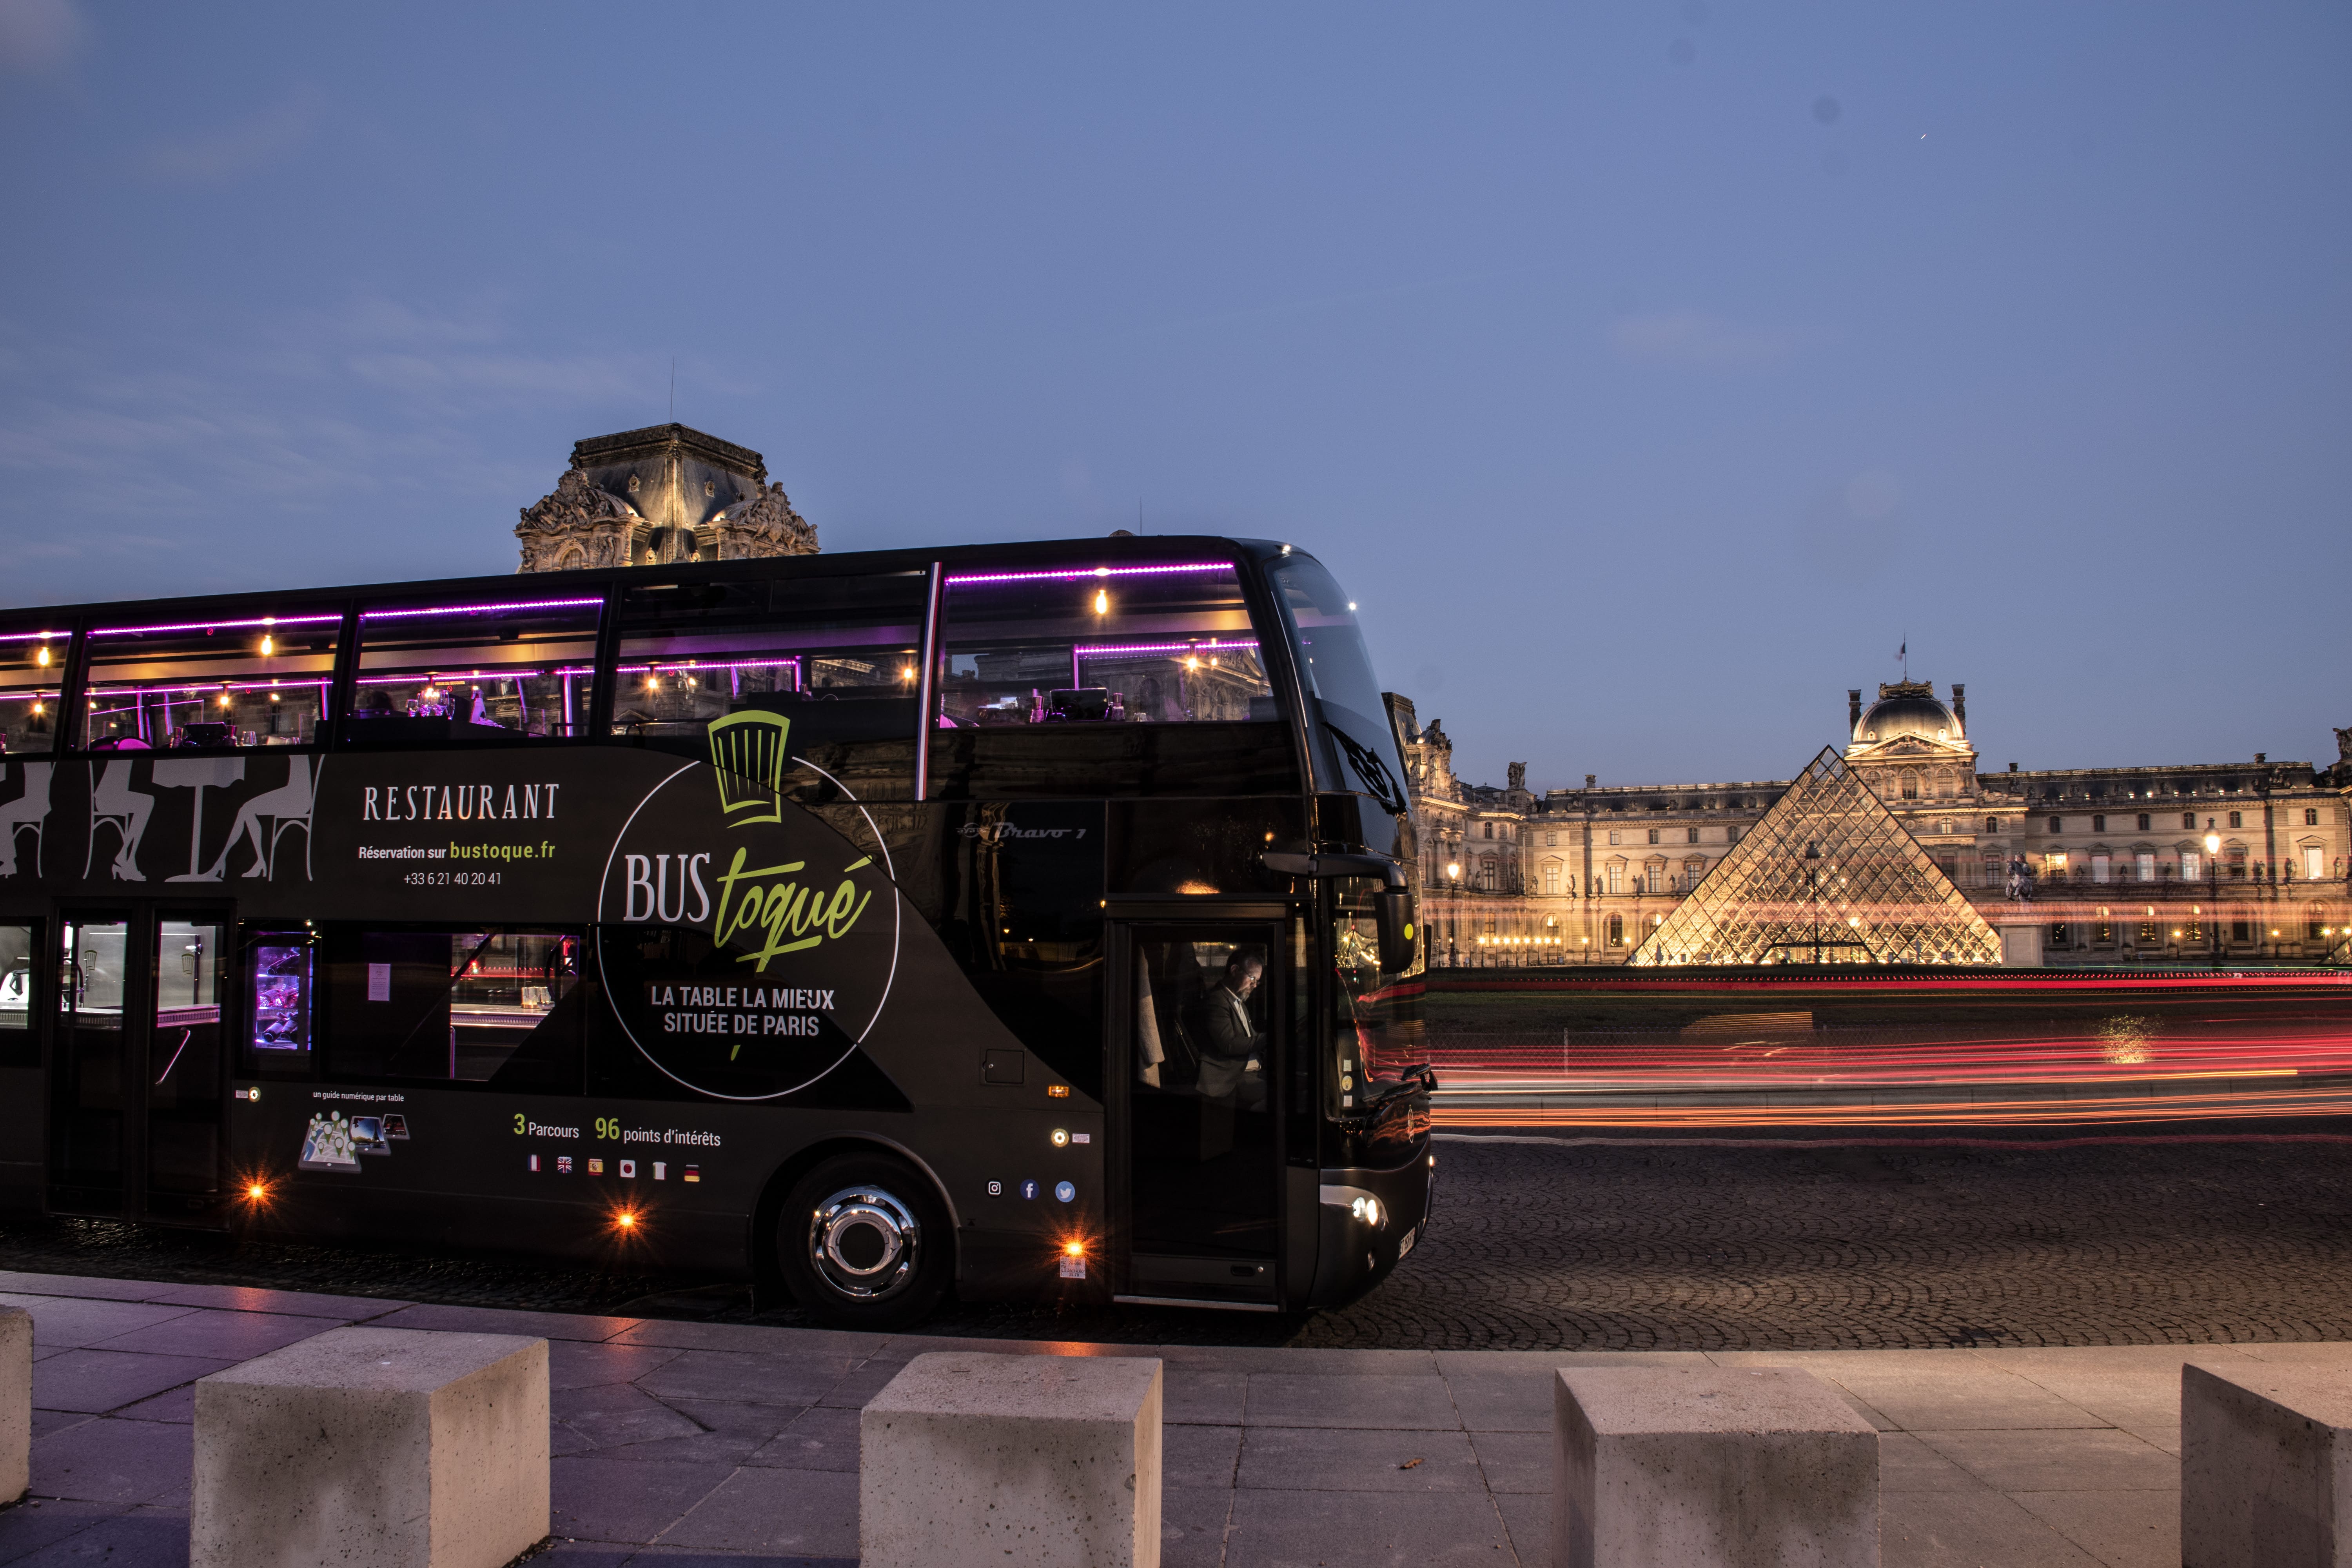 Parisian dinner on the Bus Toqué (18:00) - Paris - 